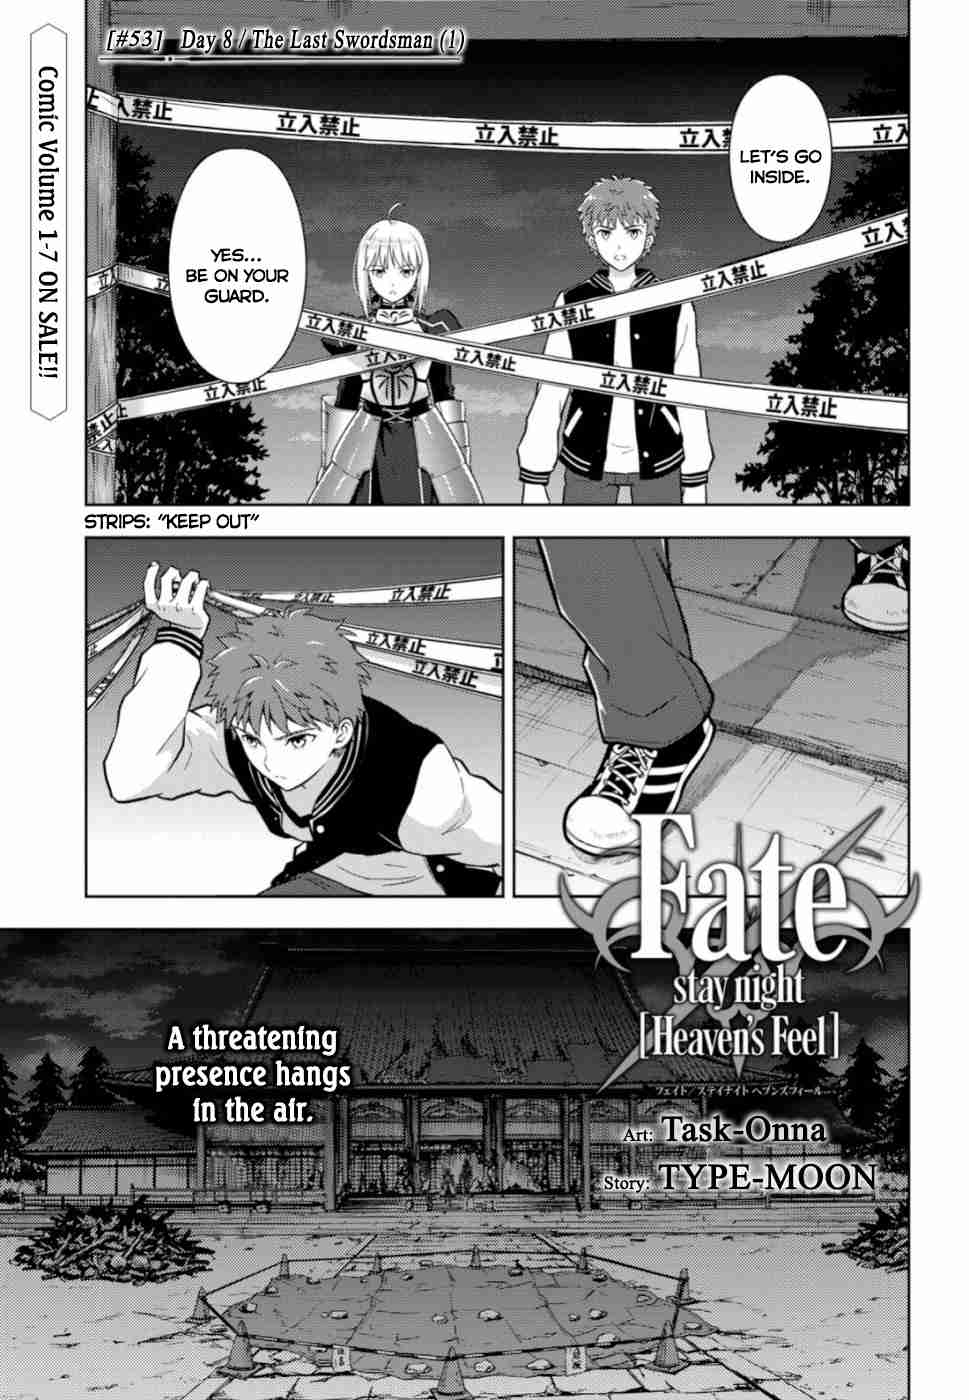 Fate/stay night: Heaven's Feel Vol. 8 Ch. 53 Day 8 / The Last Swordsman (1)